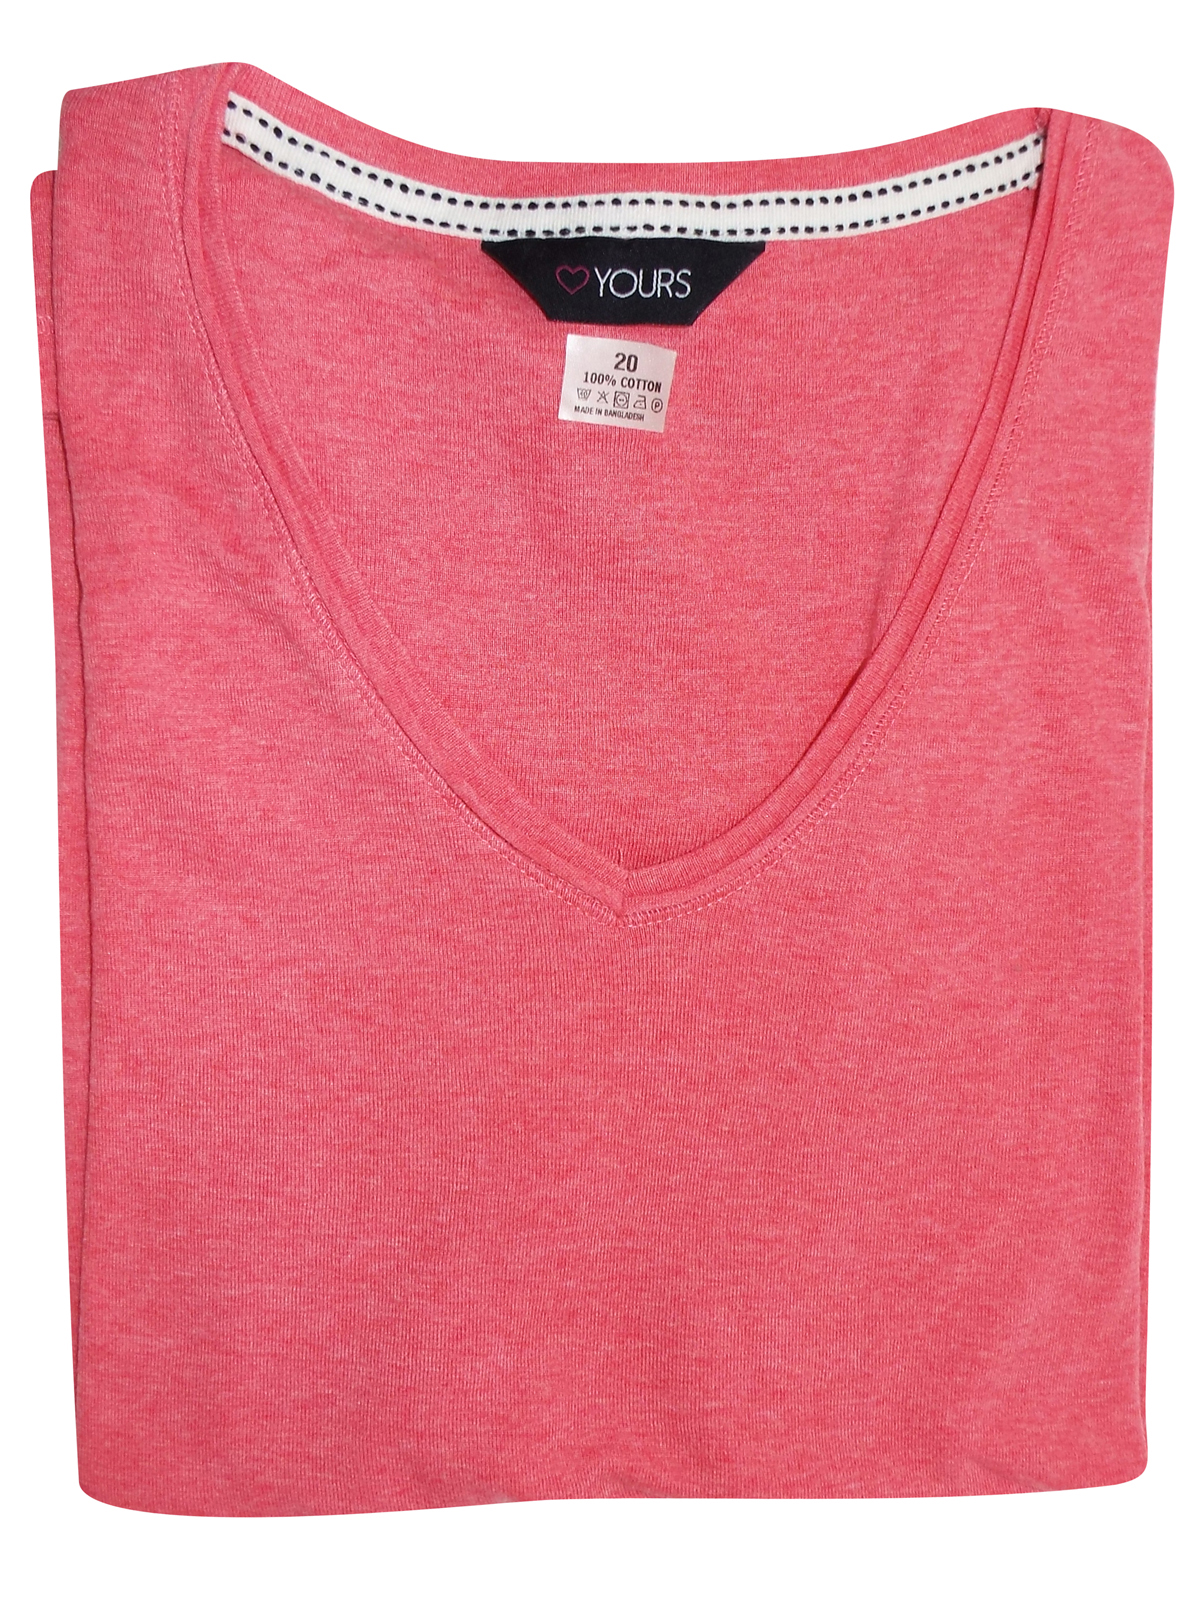 CURVE - - ROSE Pure Cotton V-Neck Short Sleeve T-Shirt - Plus Size 20 to 34